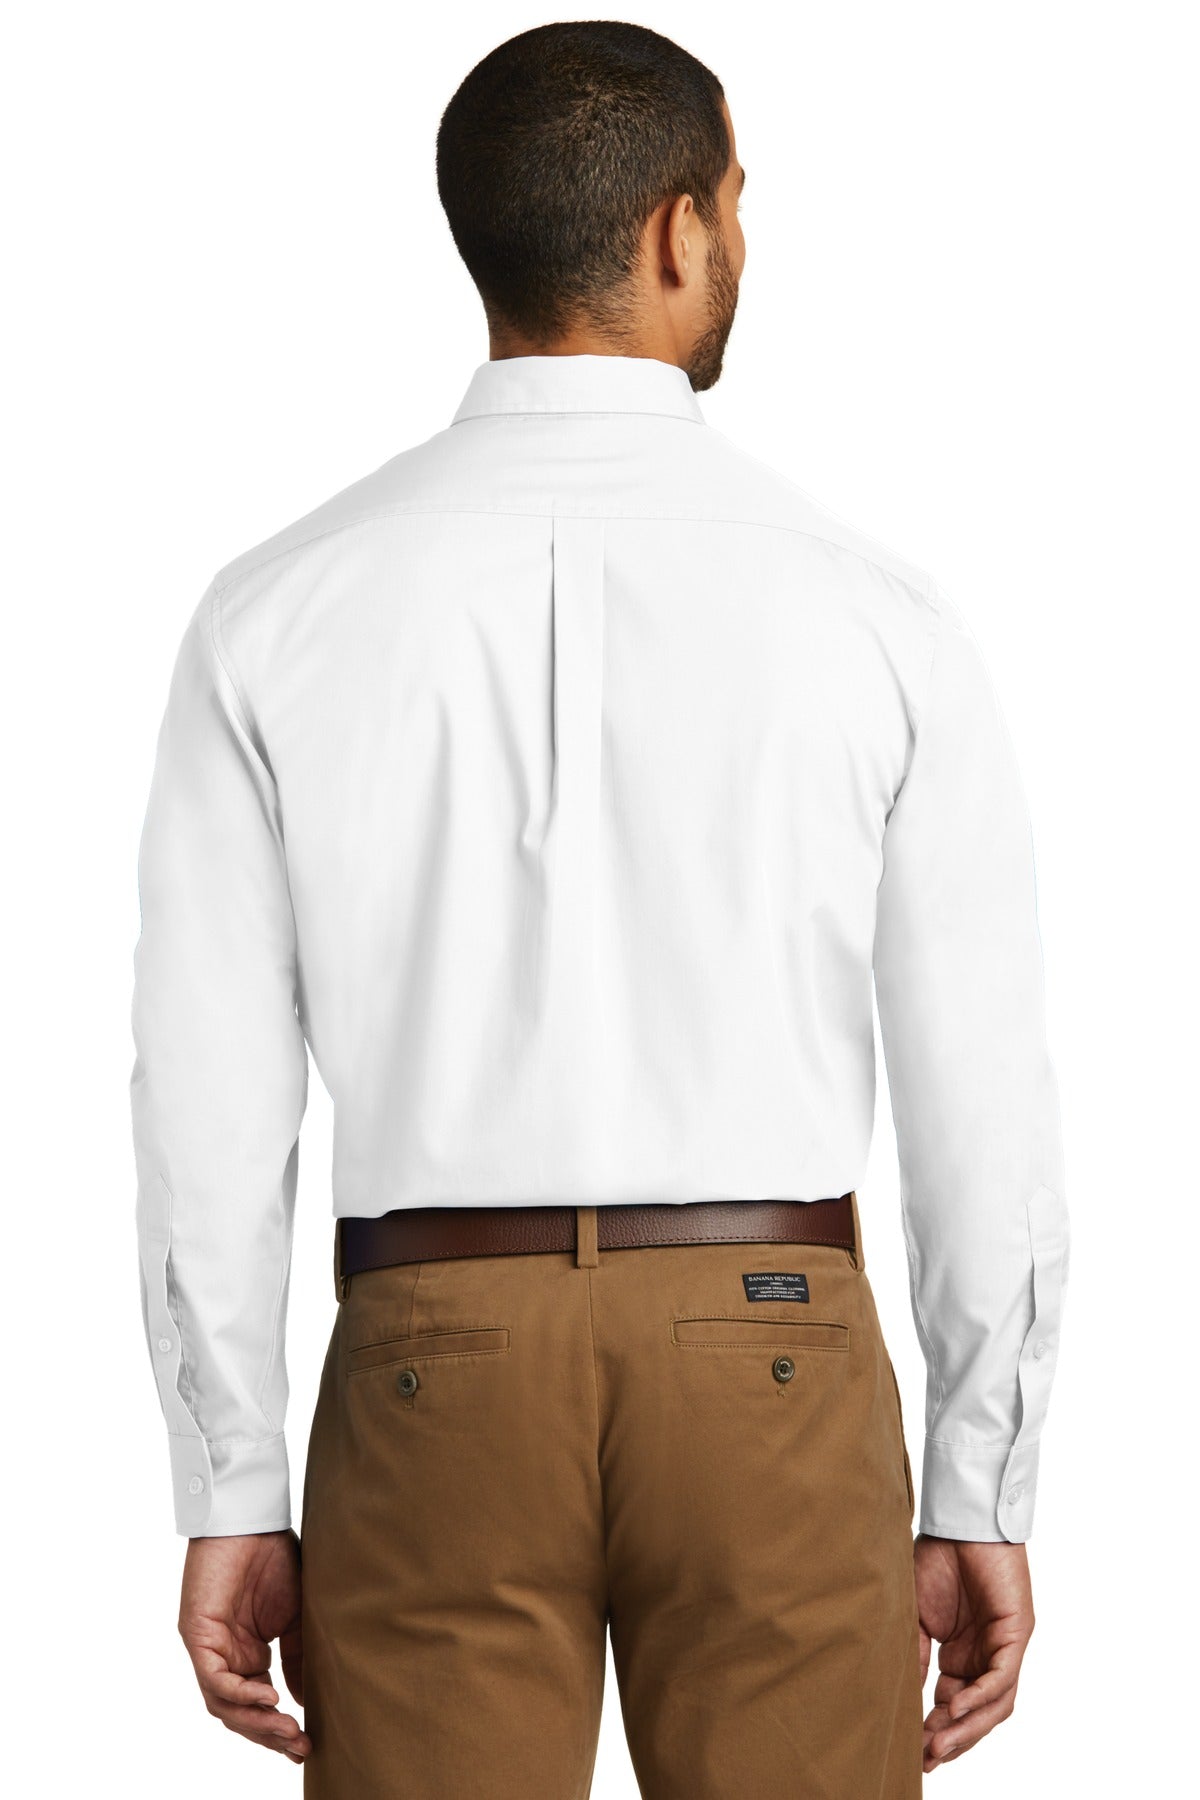 Port Authority Tall Long Sleeve Carefree Poplin Shirt. TW100